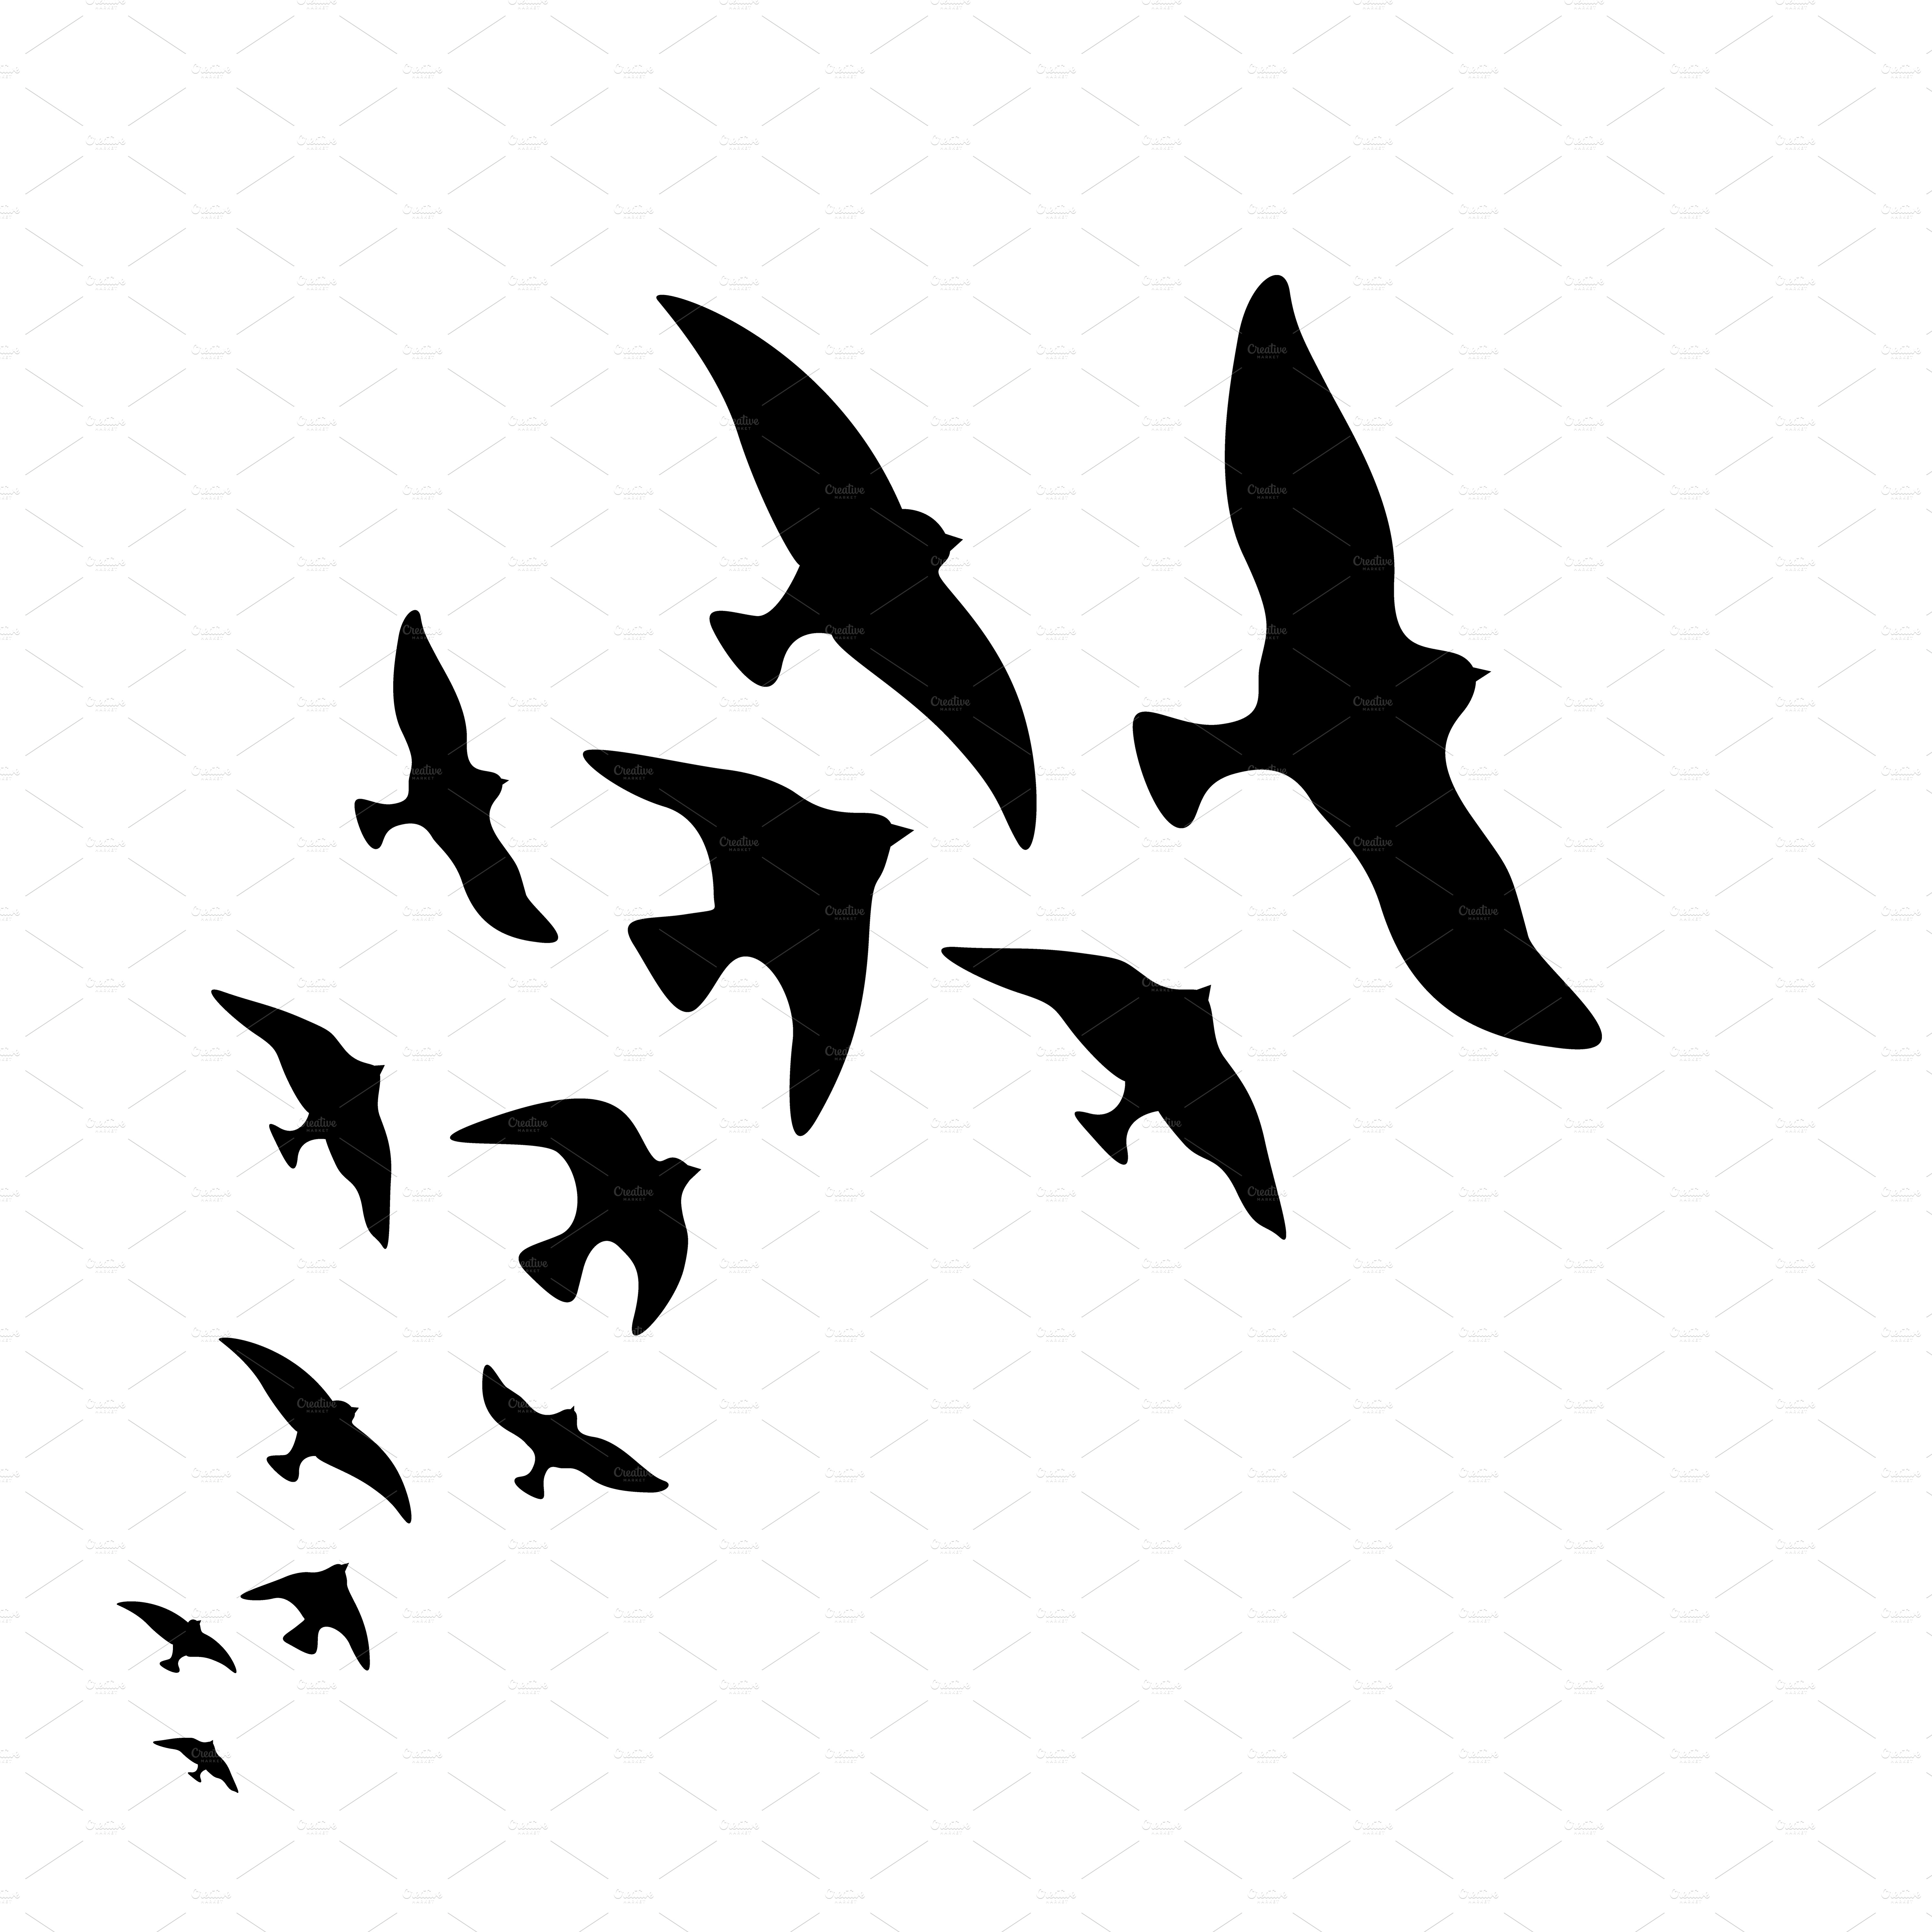 Download Vector flock of flying birds ~ Illustrations ~ Creative Market